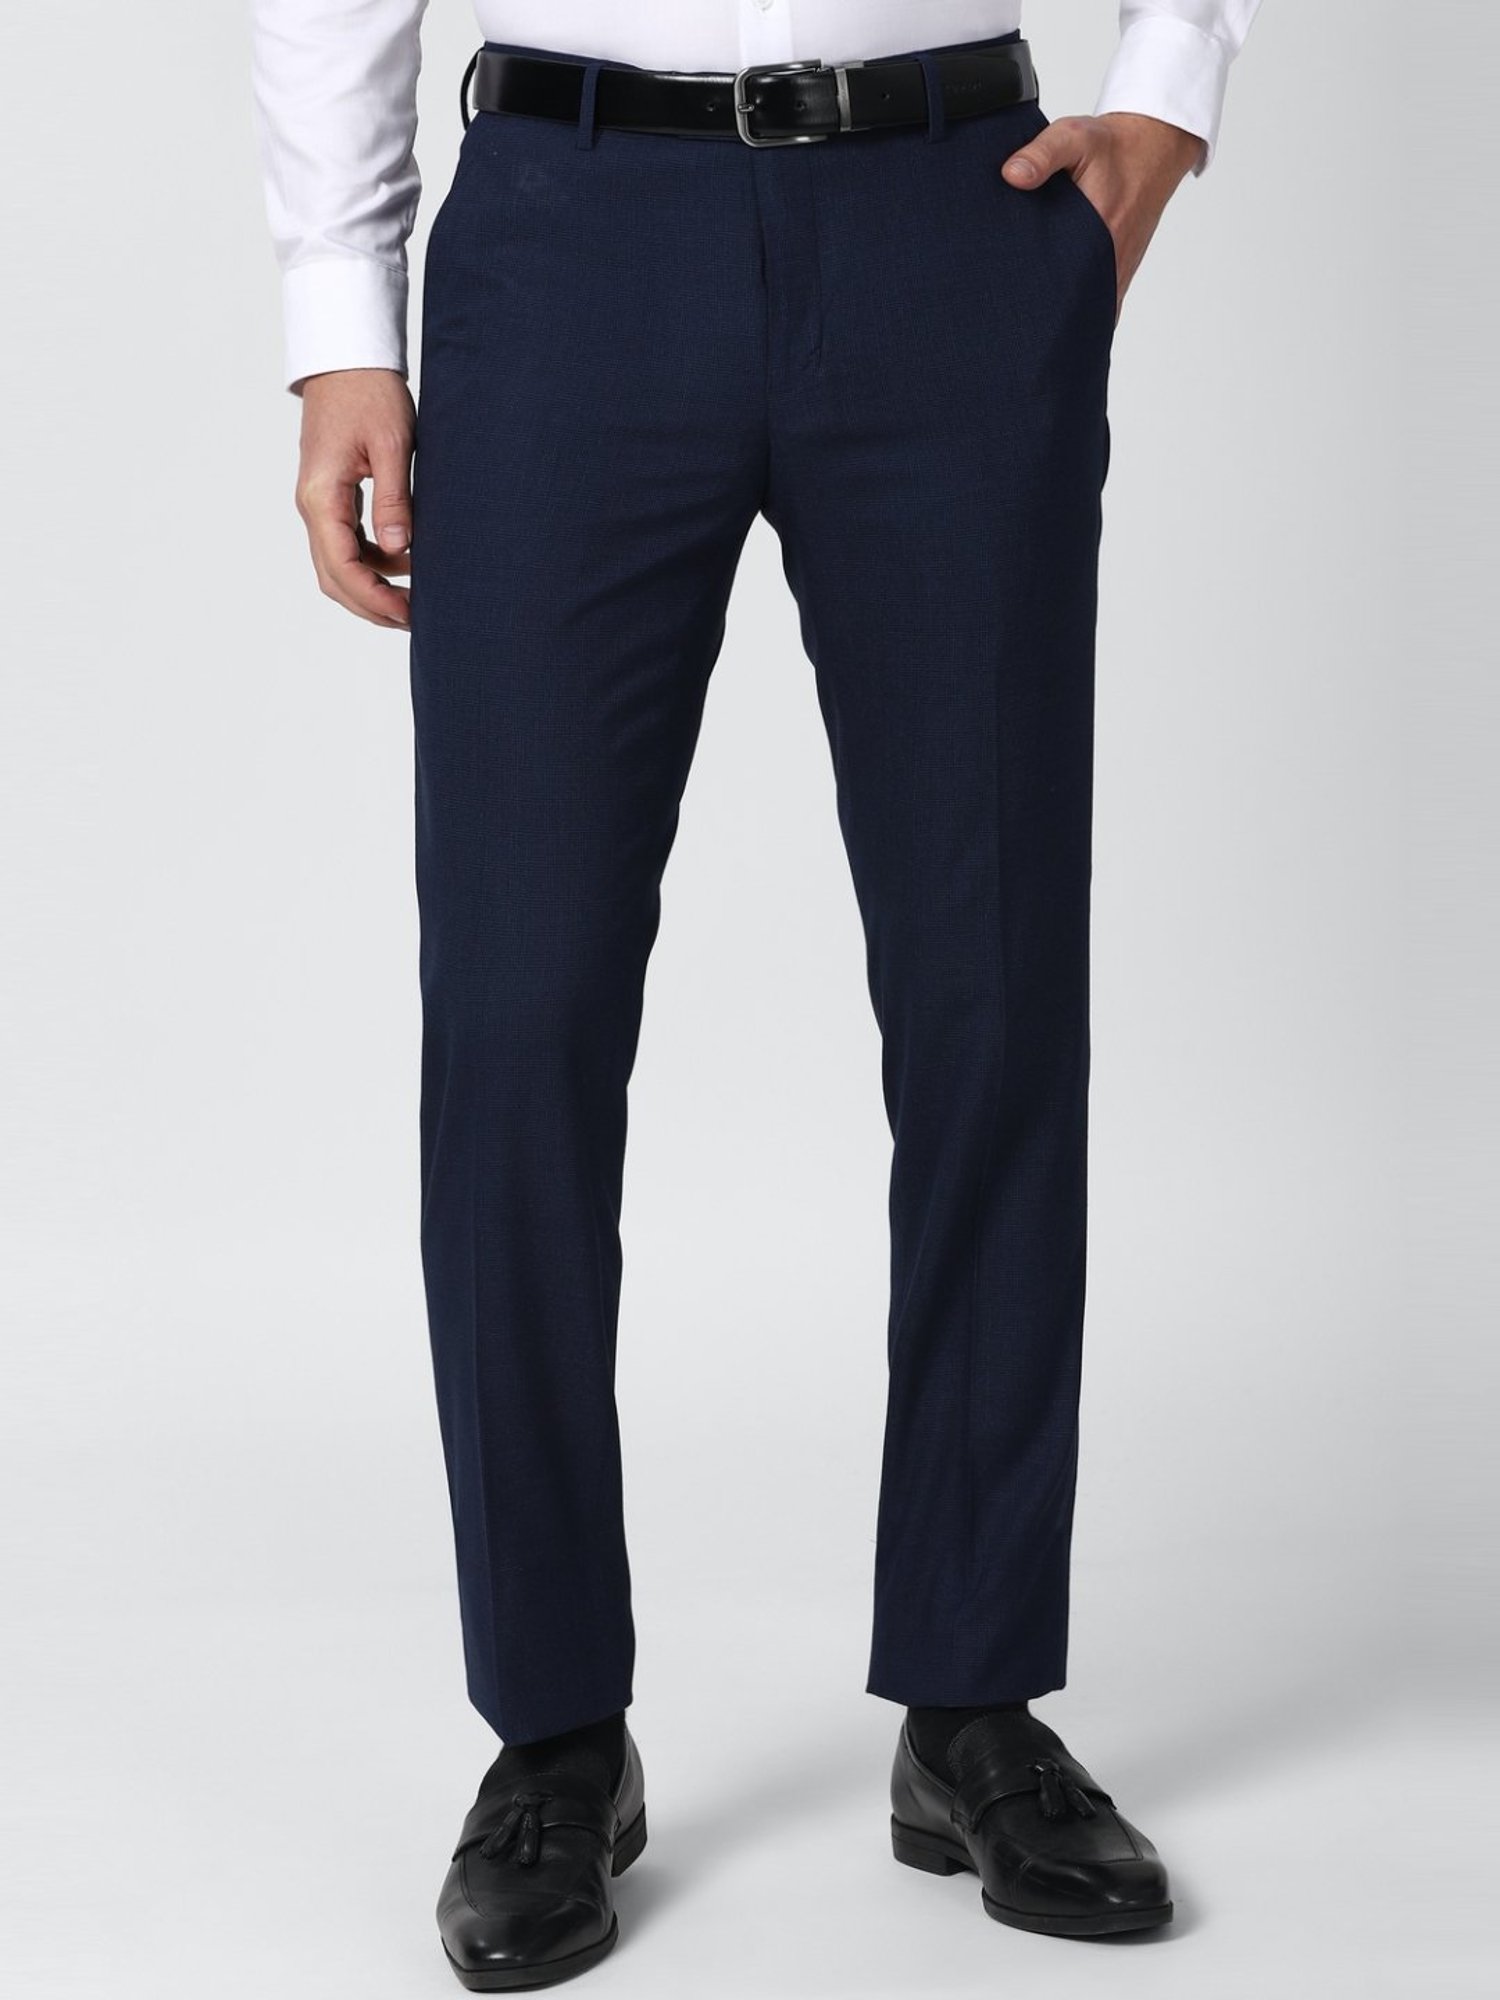 MANCREW Men Formal trousers Combo  Navy Blue Black Formal pants for men